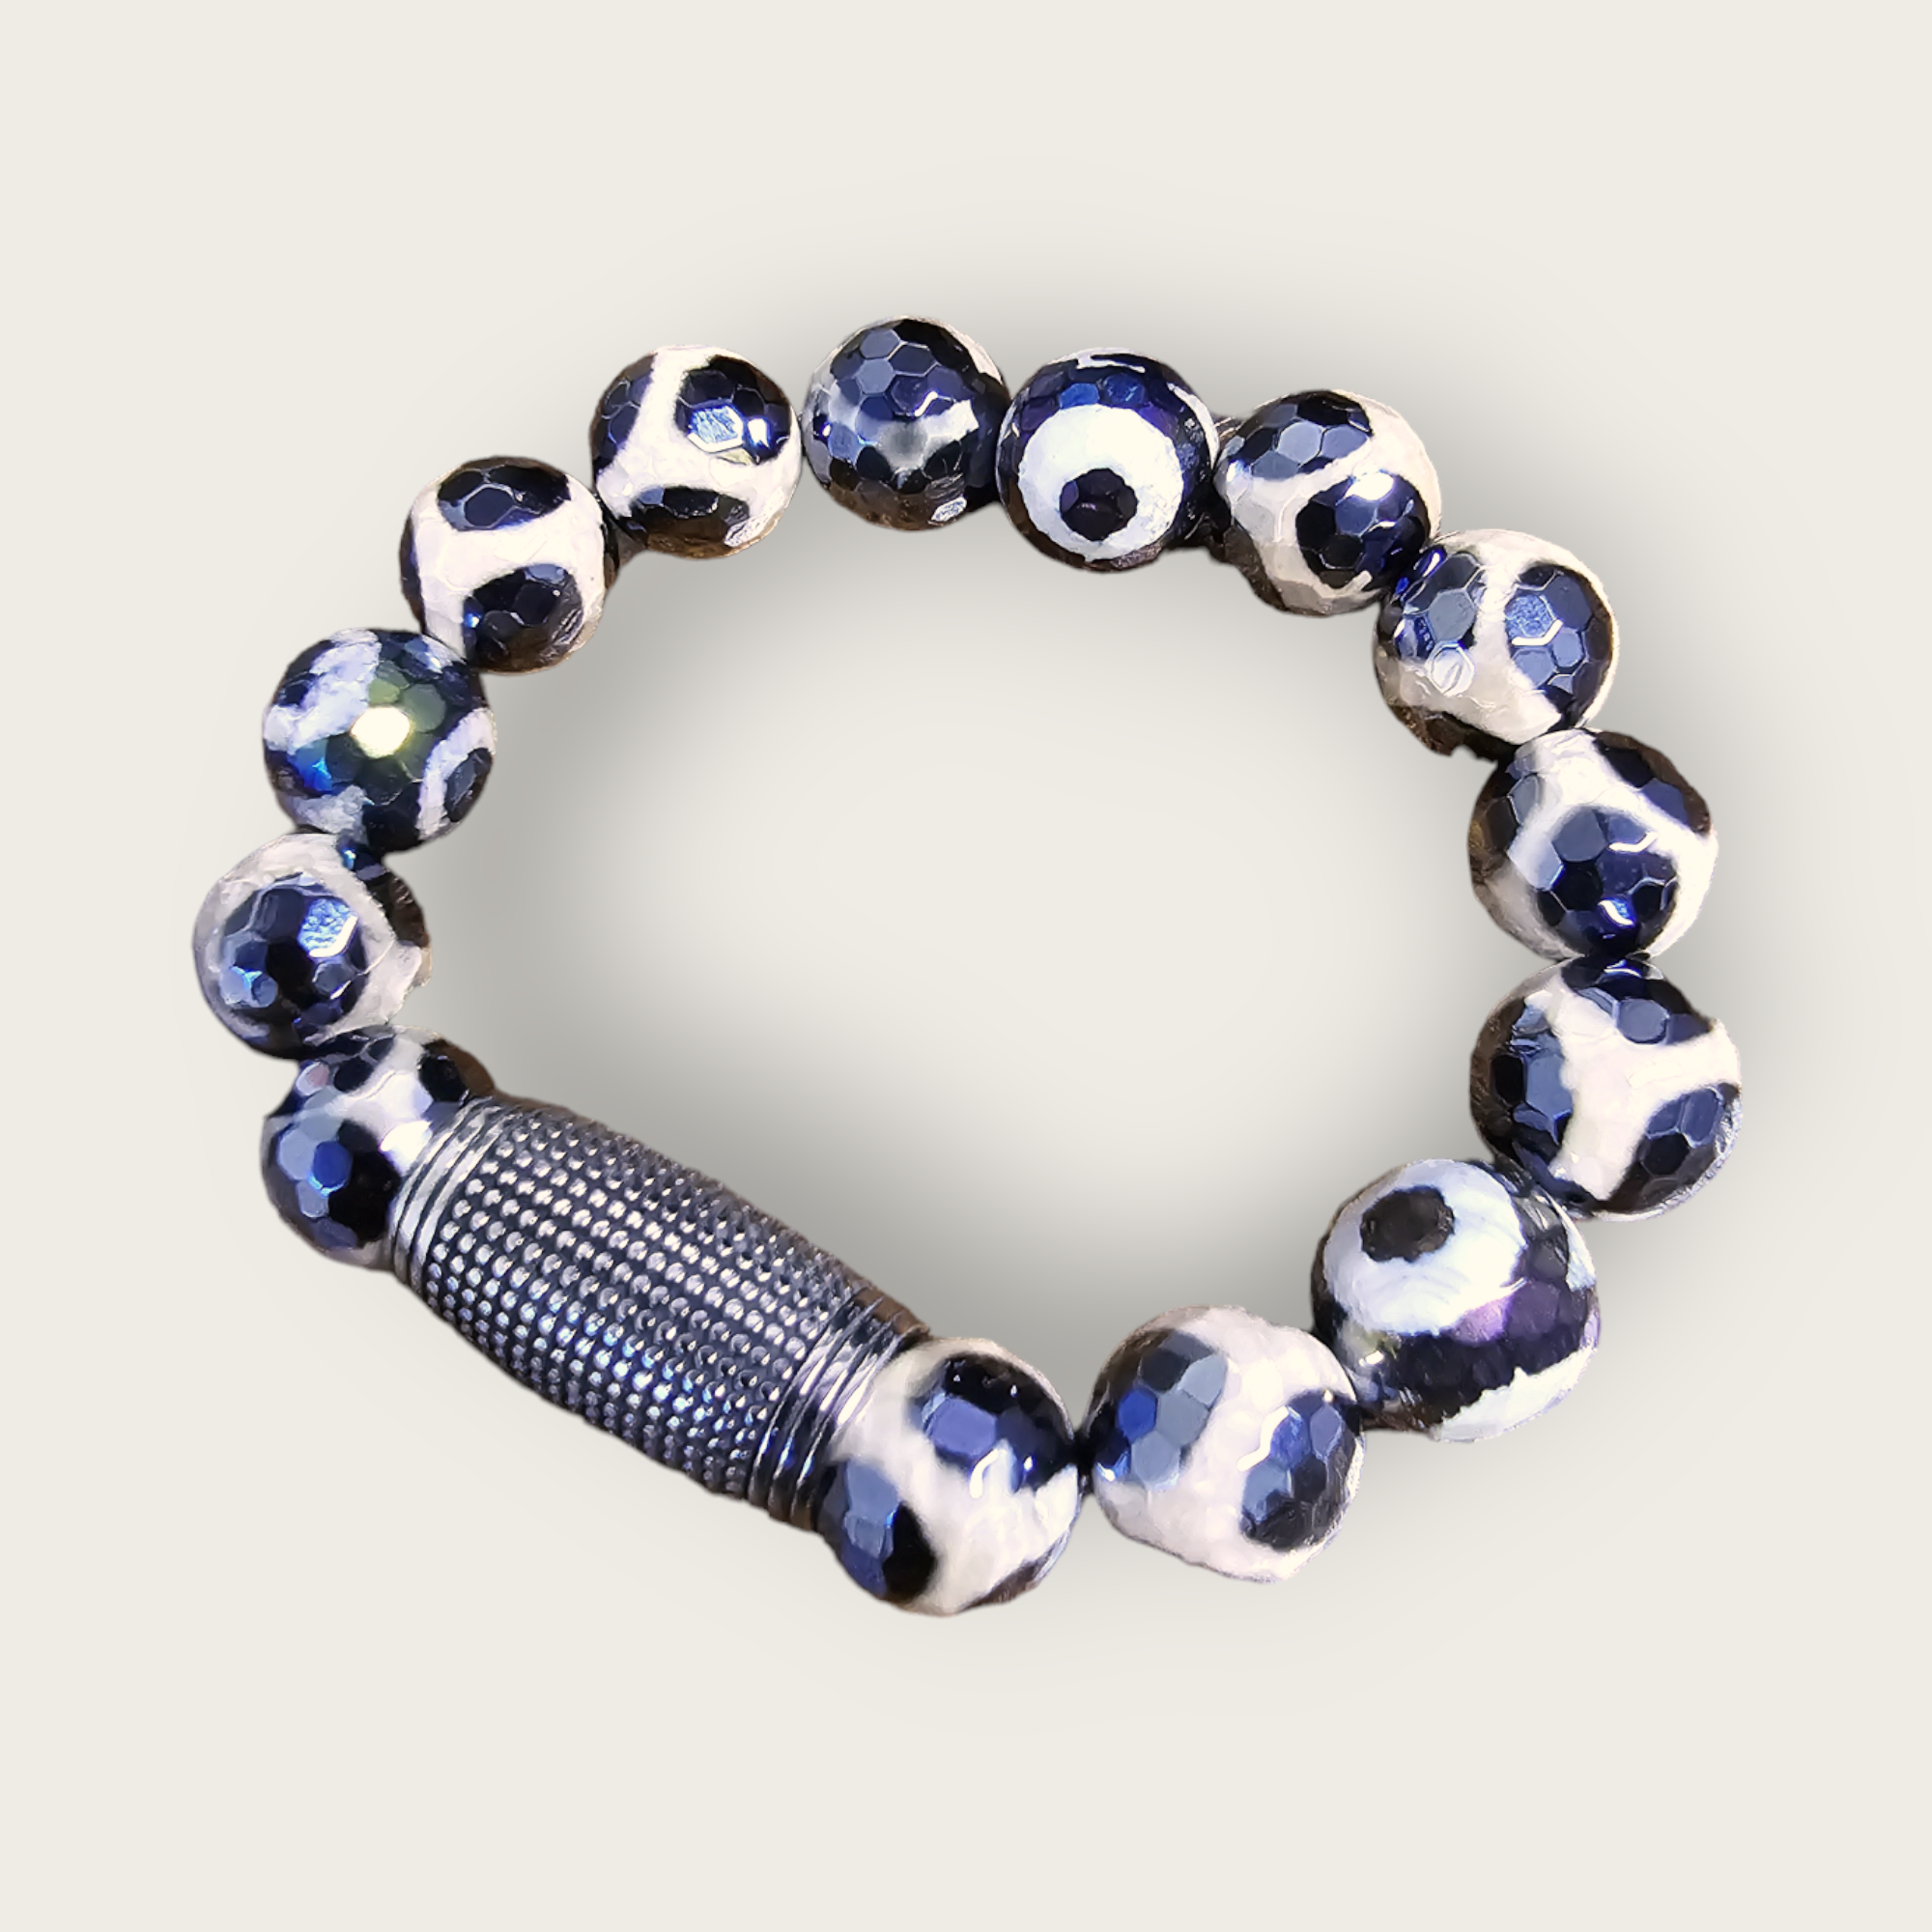 Iridescent Tibetan Agate Bracelet with Stainless Steel Tube